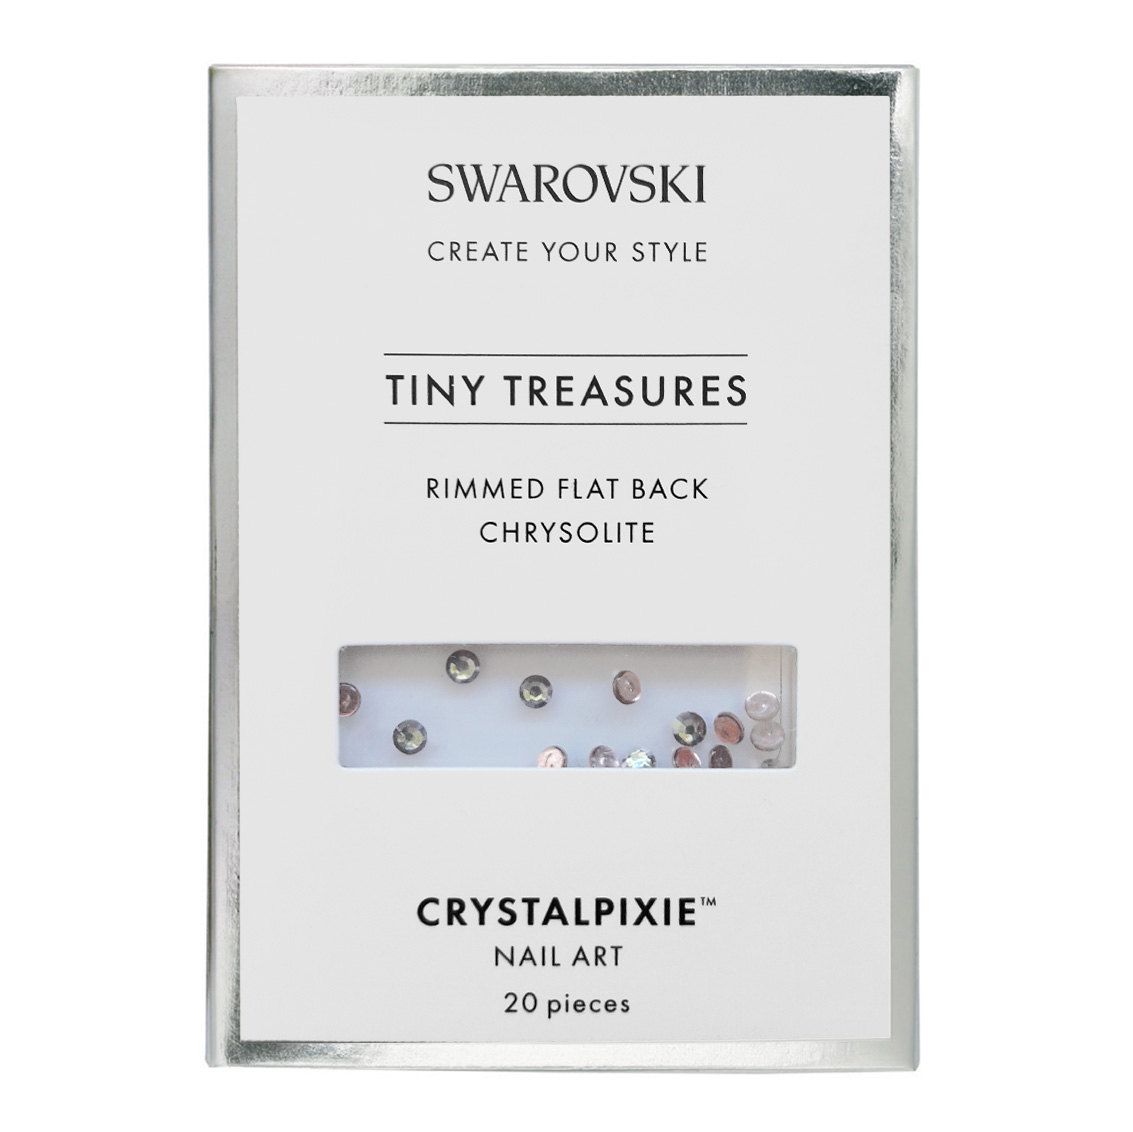 Rimmmed Flat Back - Chysolite 20 pz - Swarovski Tiny Treasur